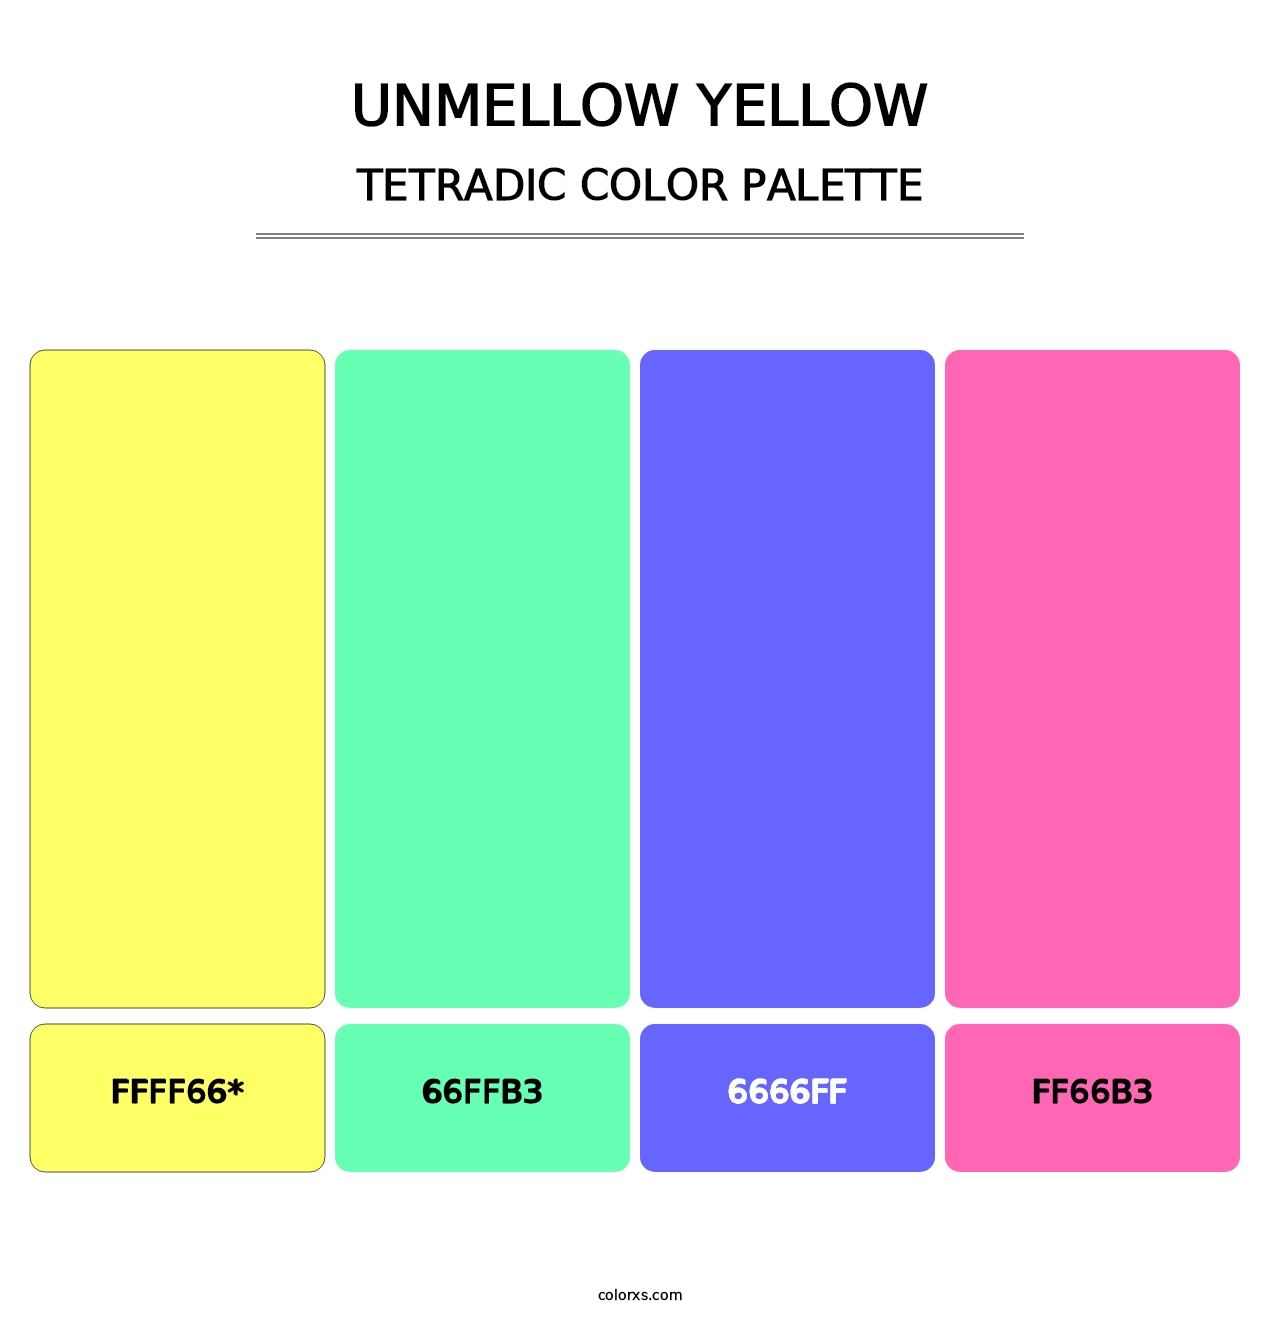 Unmellow Yellow - Tetradic Color Palette